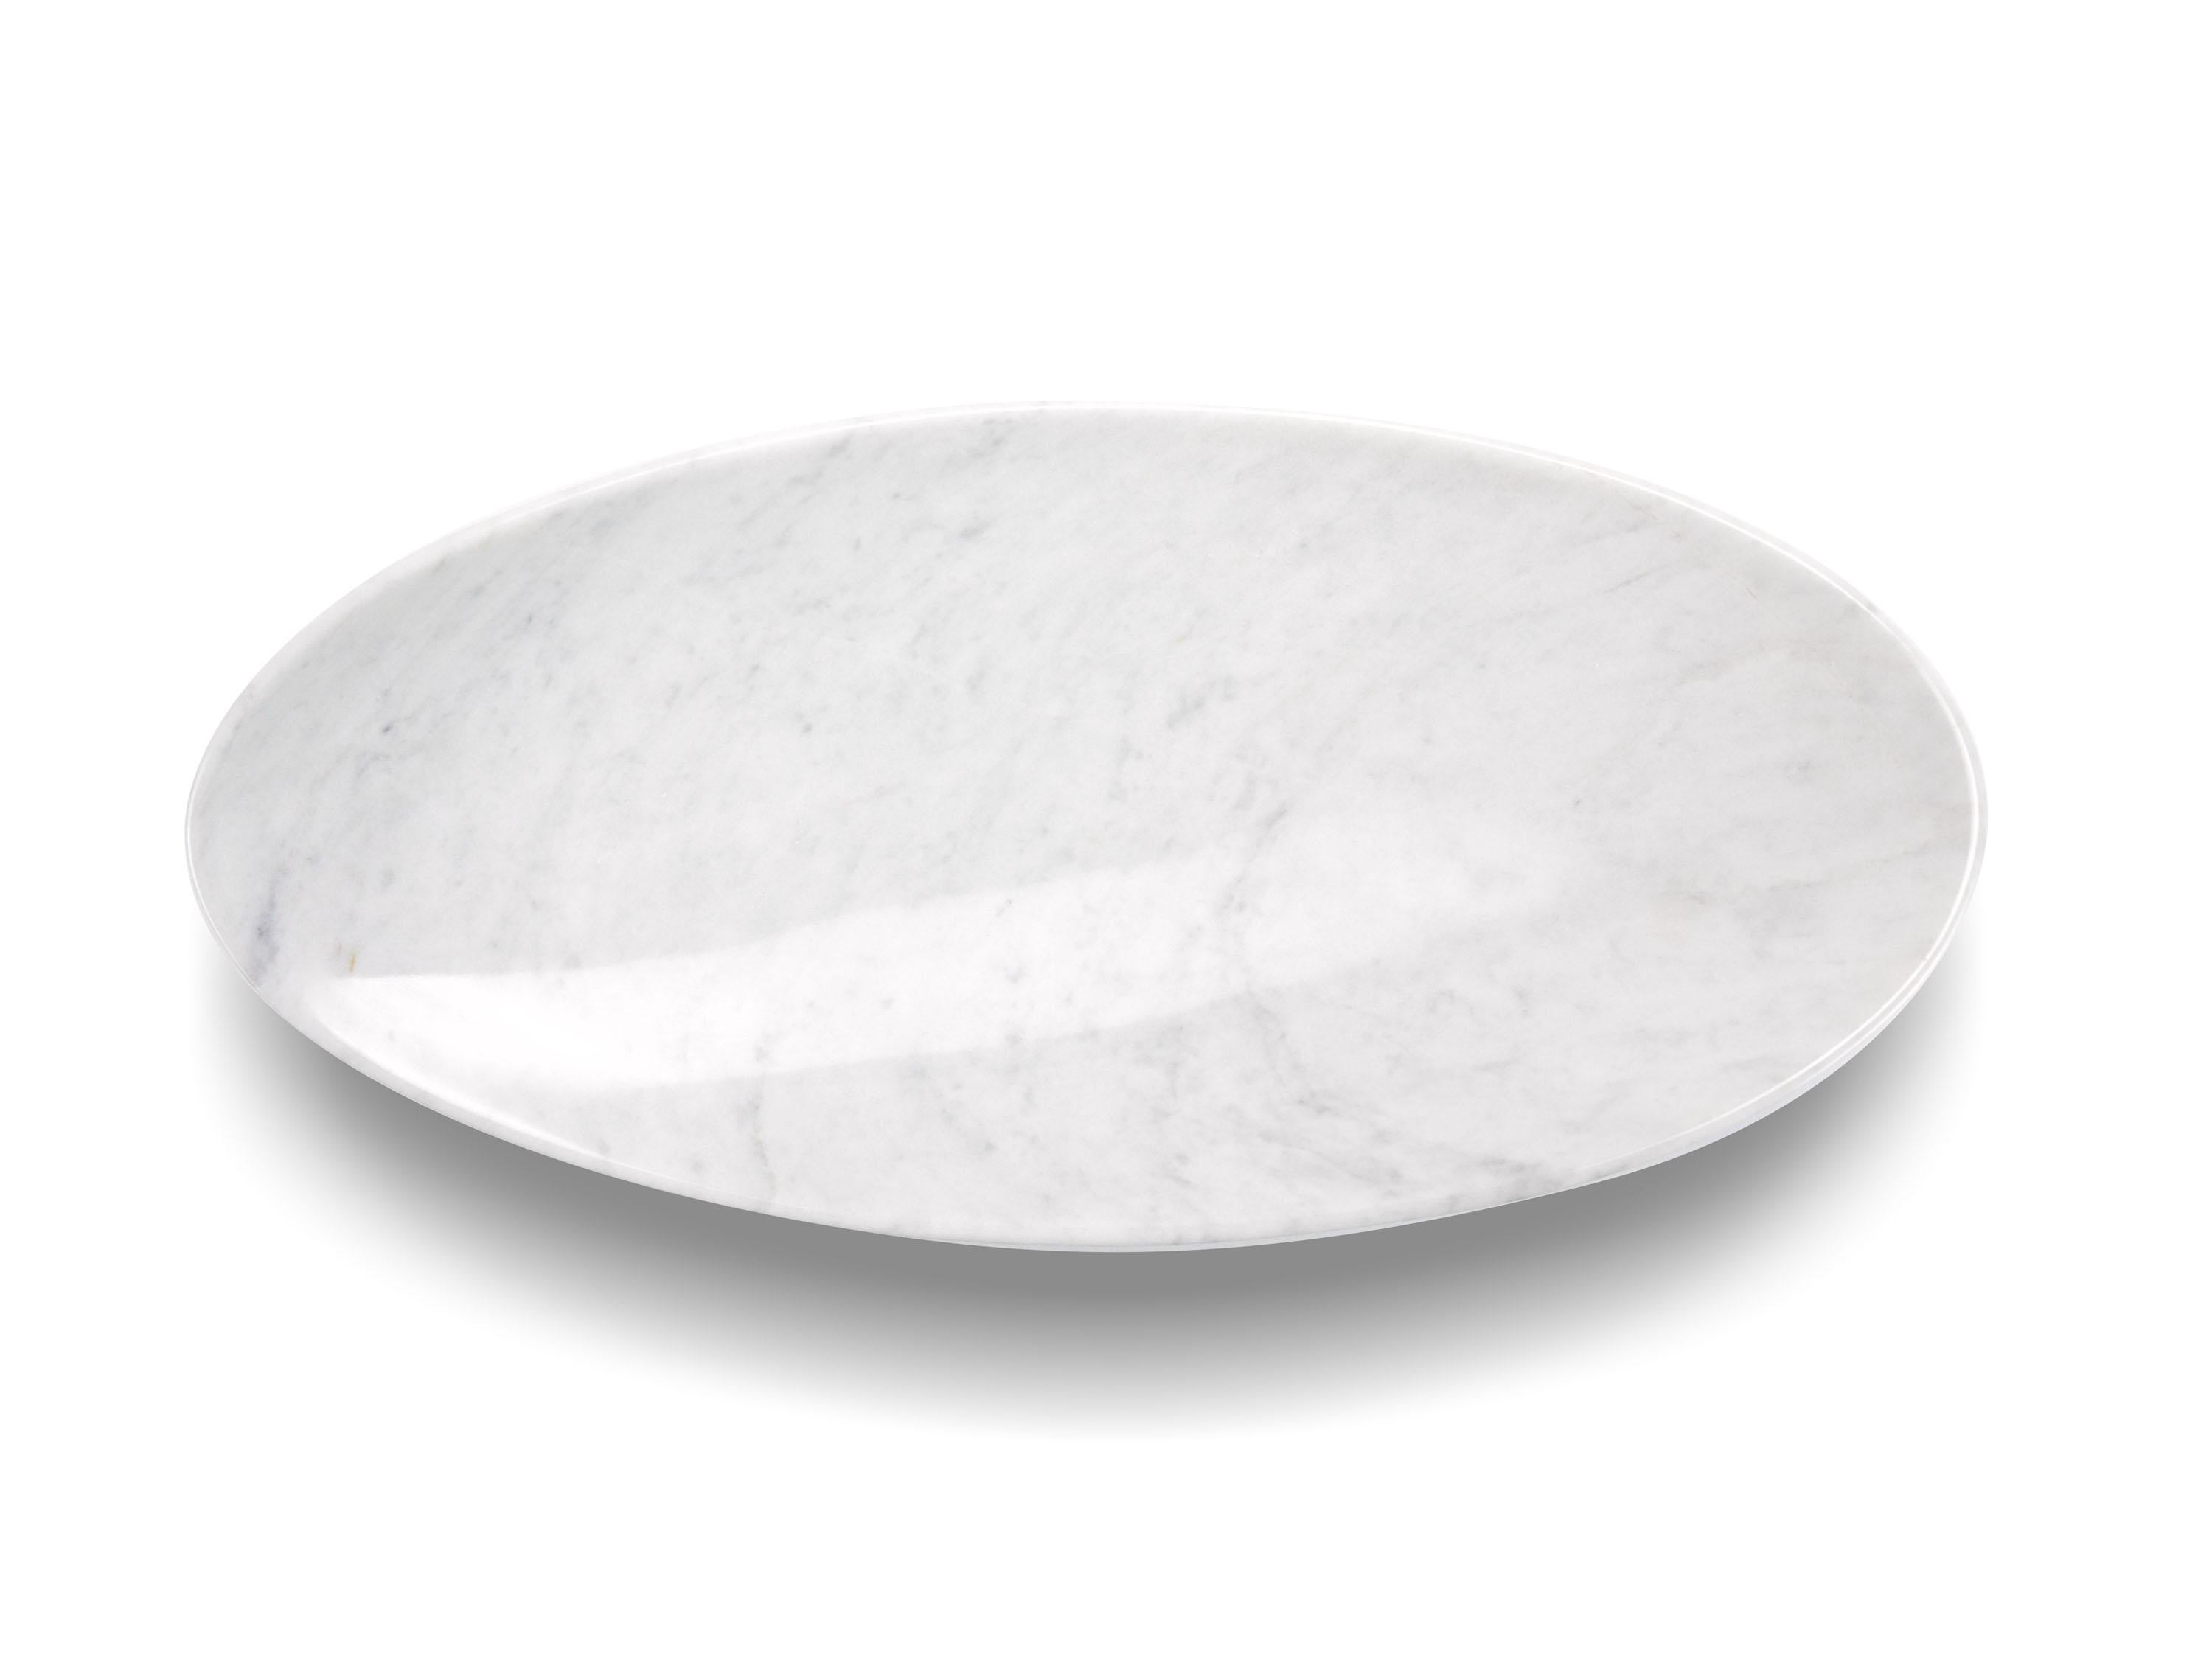 Italian White Carrara Marble Bowl Vase Vessel Centerpiece Hand Carved Design For Sale